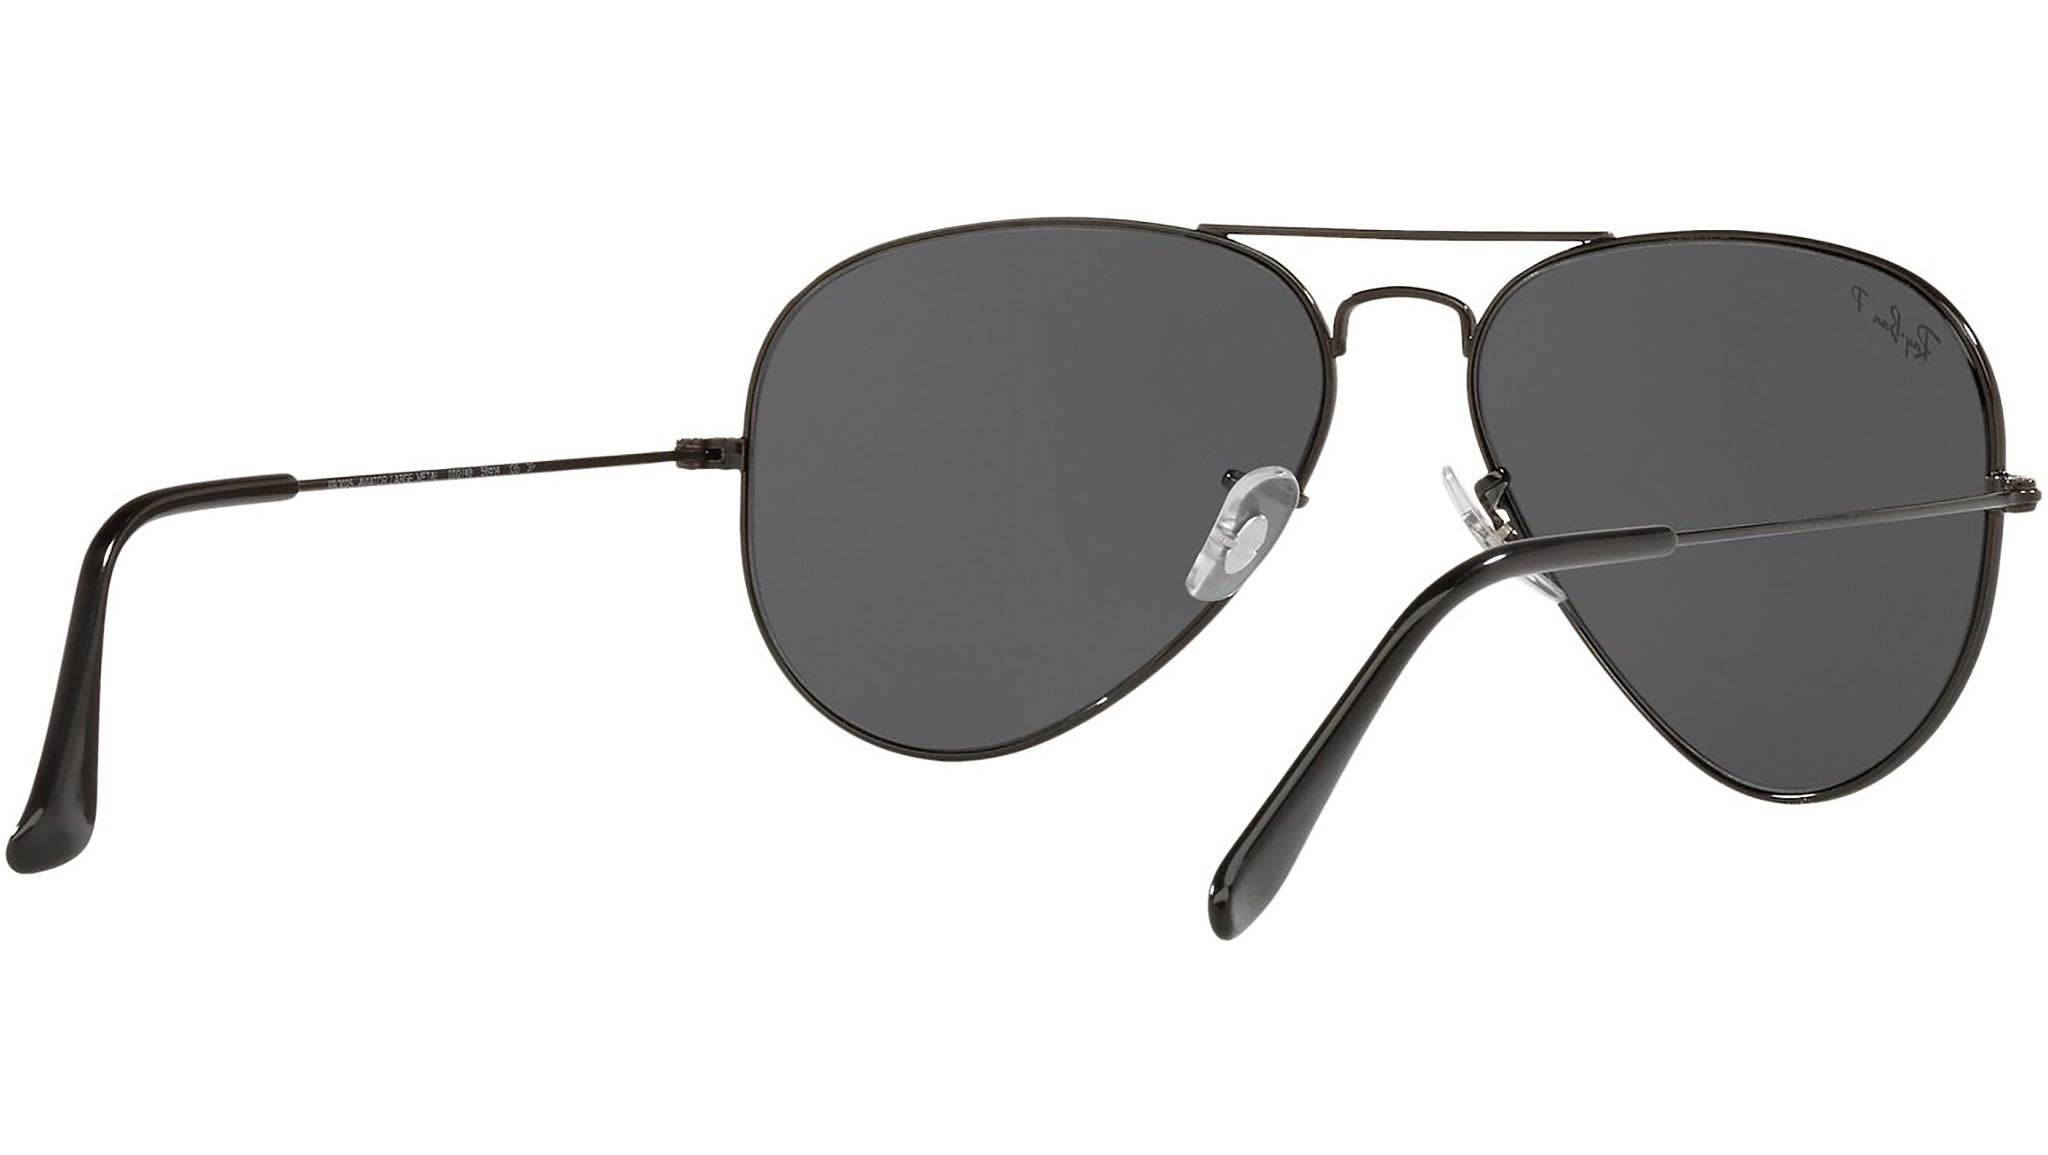 Buy Karsaer Mens Aviator Sunglasses Polarized Military Pilot Frame with  Bayonet Temples E1085 at Amazon.in